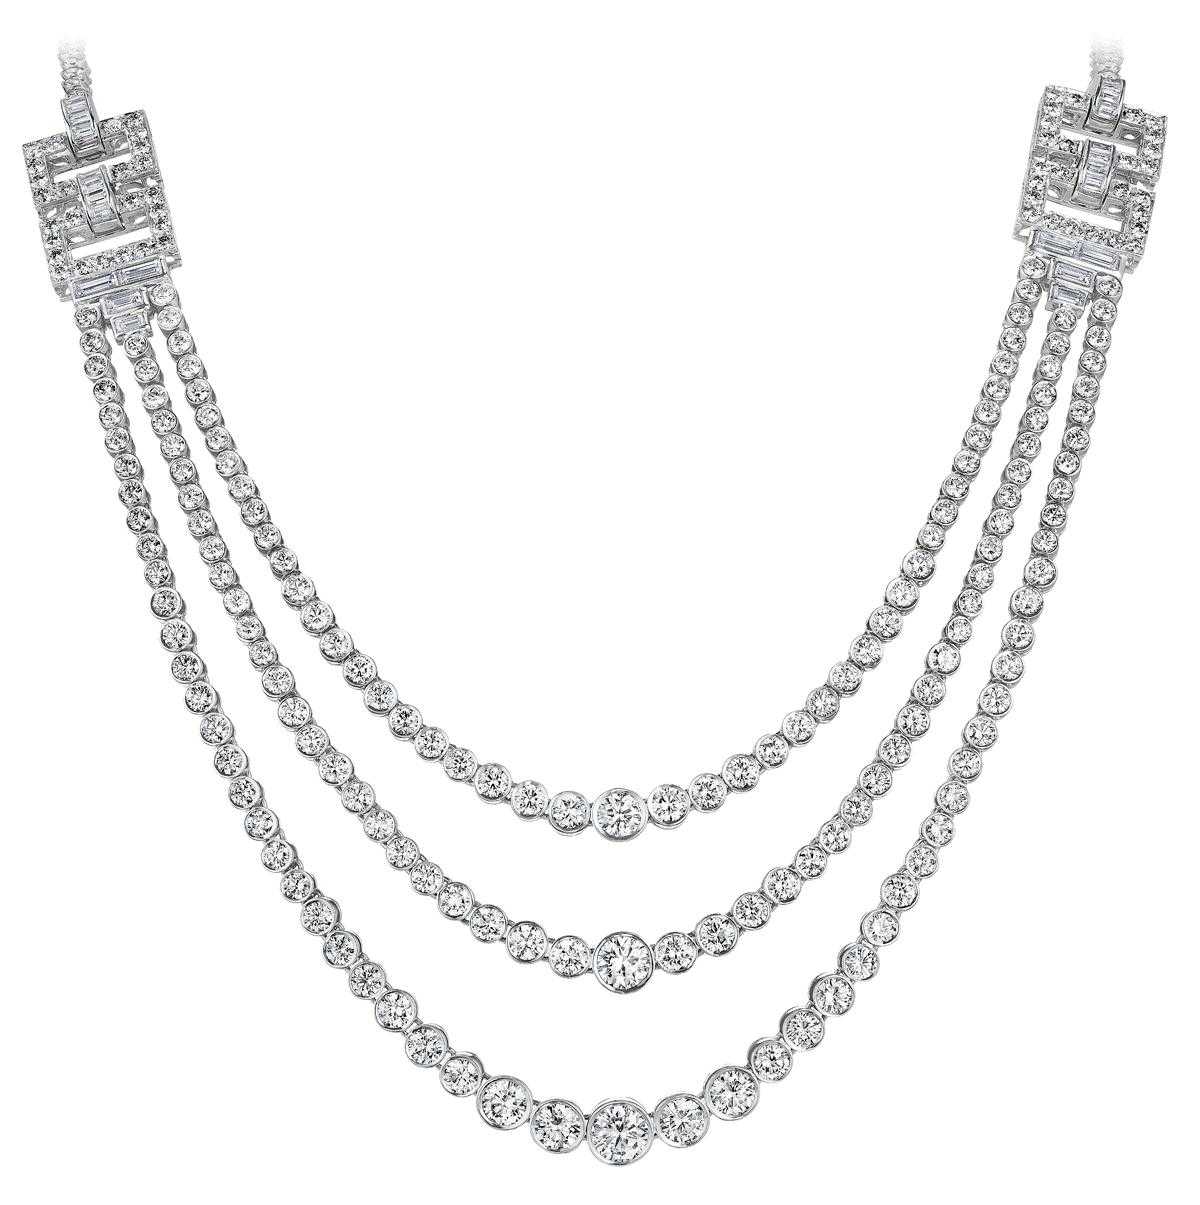 Share 75+ stacked diamond necklace - POPPY